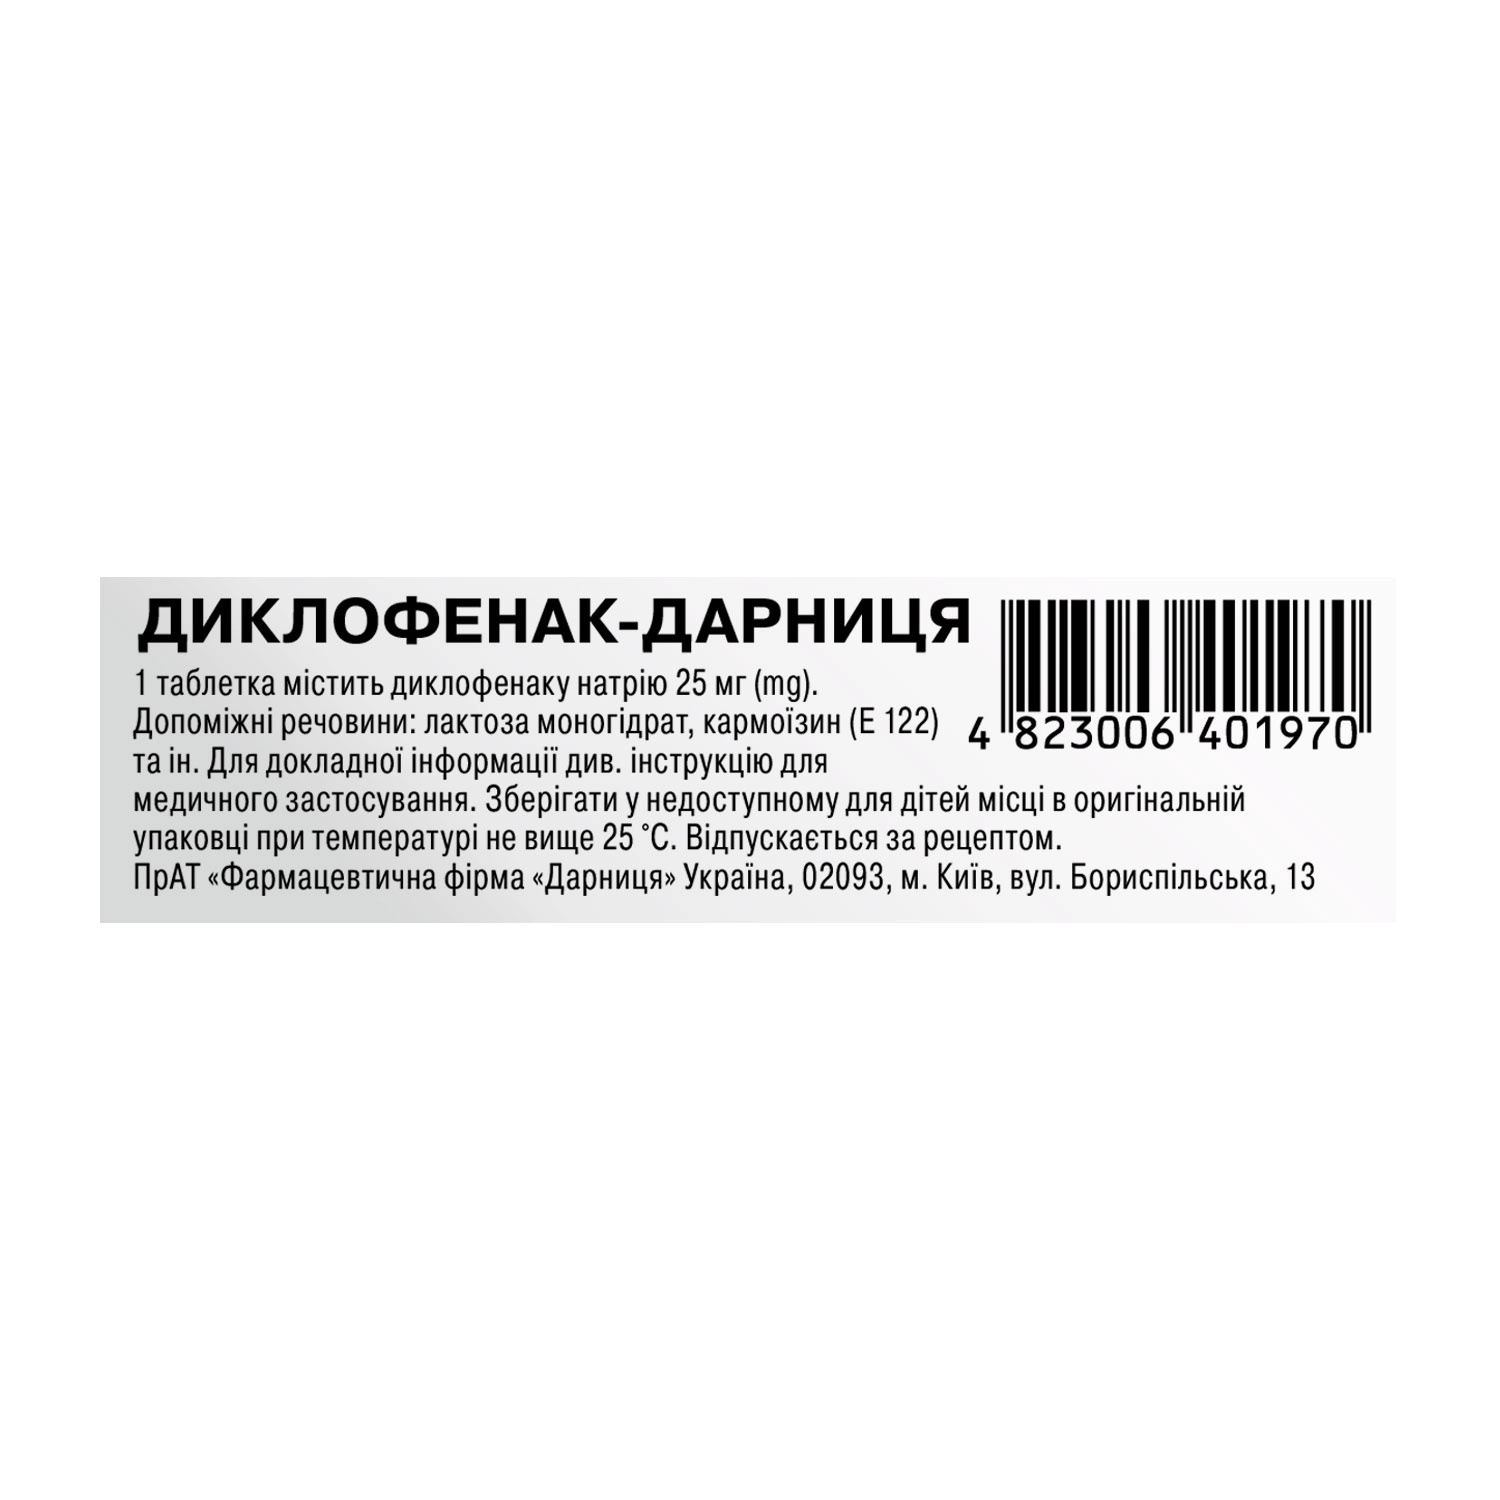 Diclofenac-Darnitsa «Darnytsia» pharmaceutical company